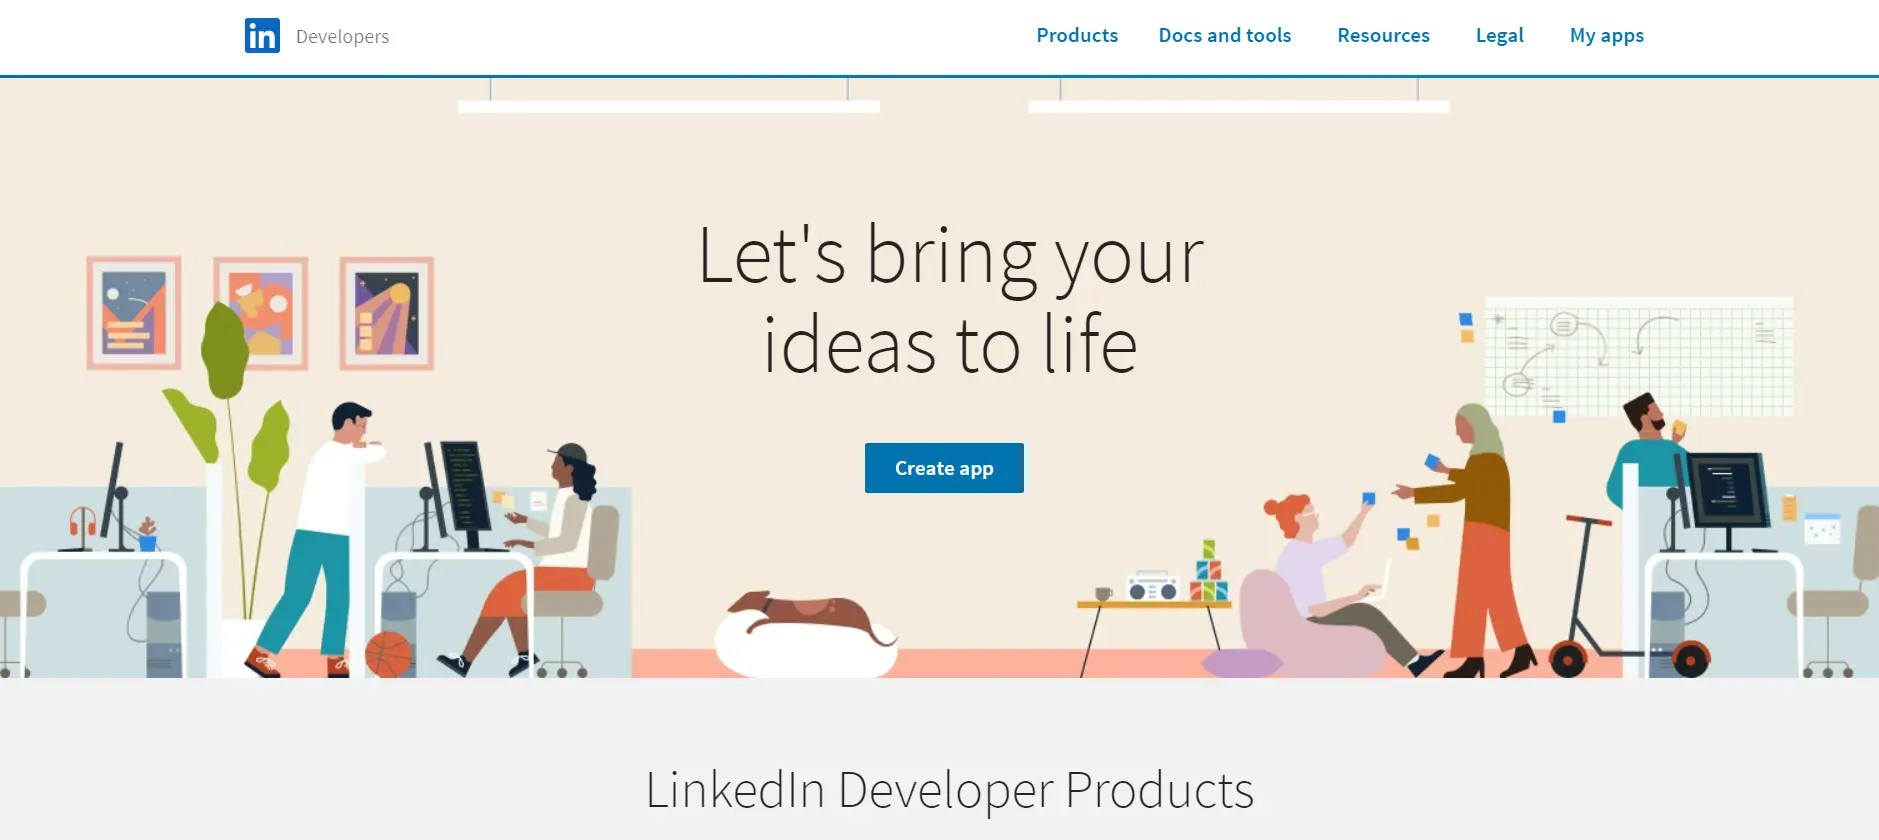 AngularSSO LinkedIn: Create-application